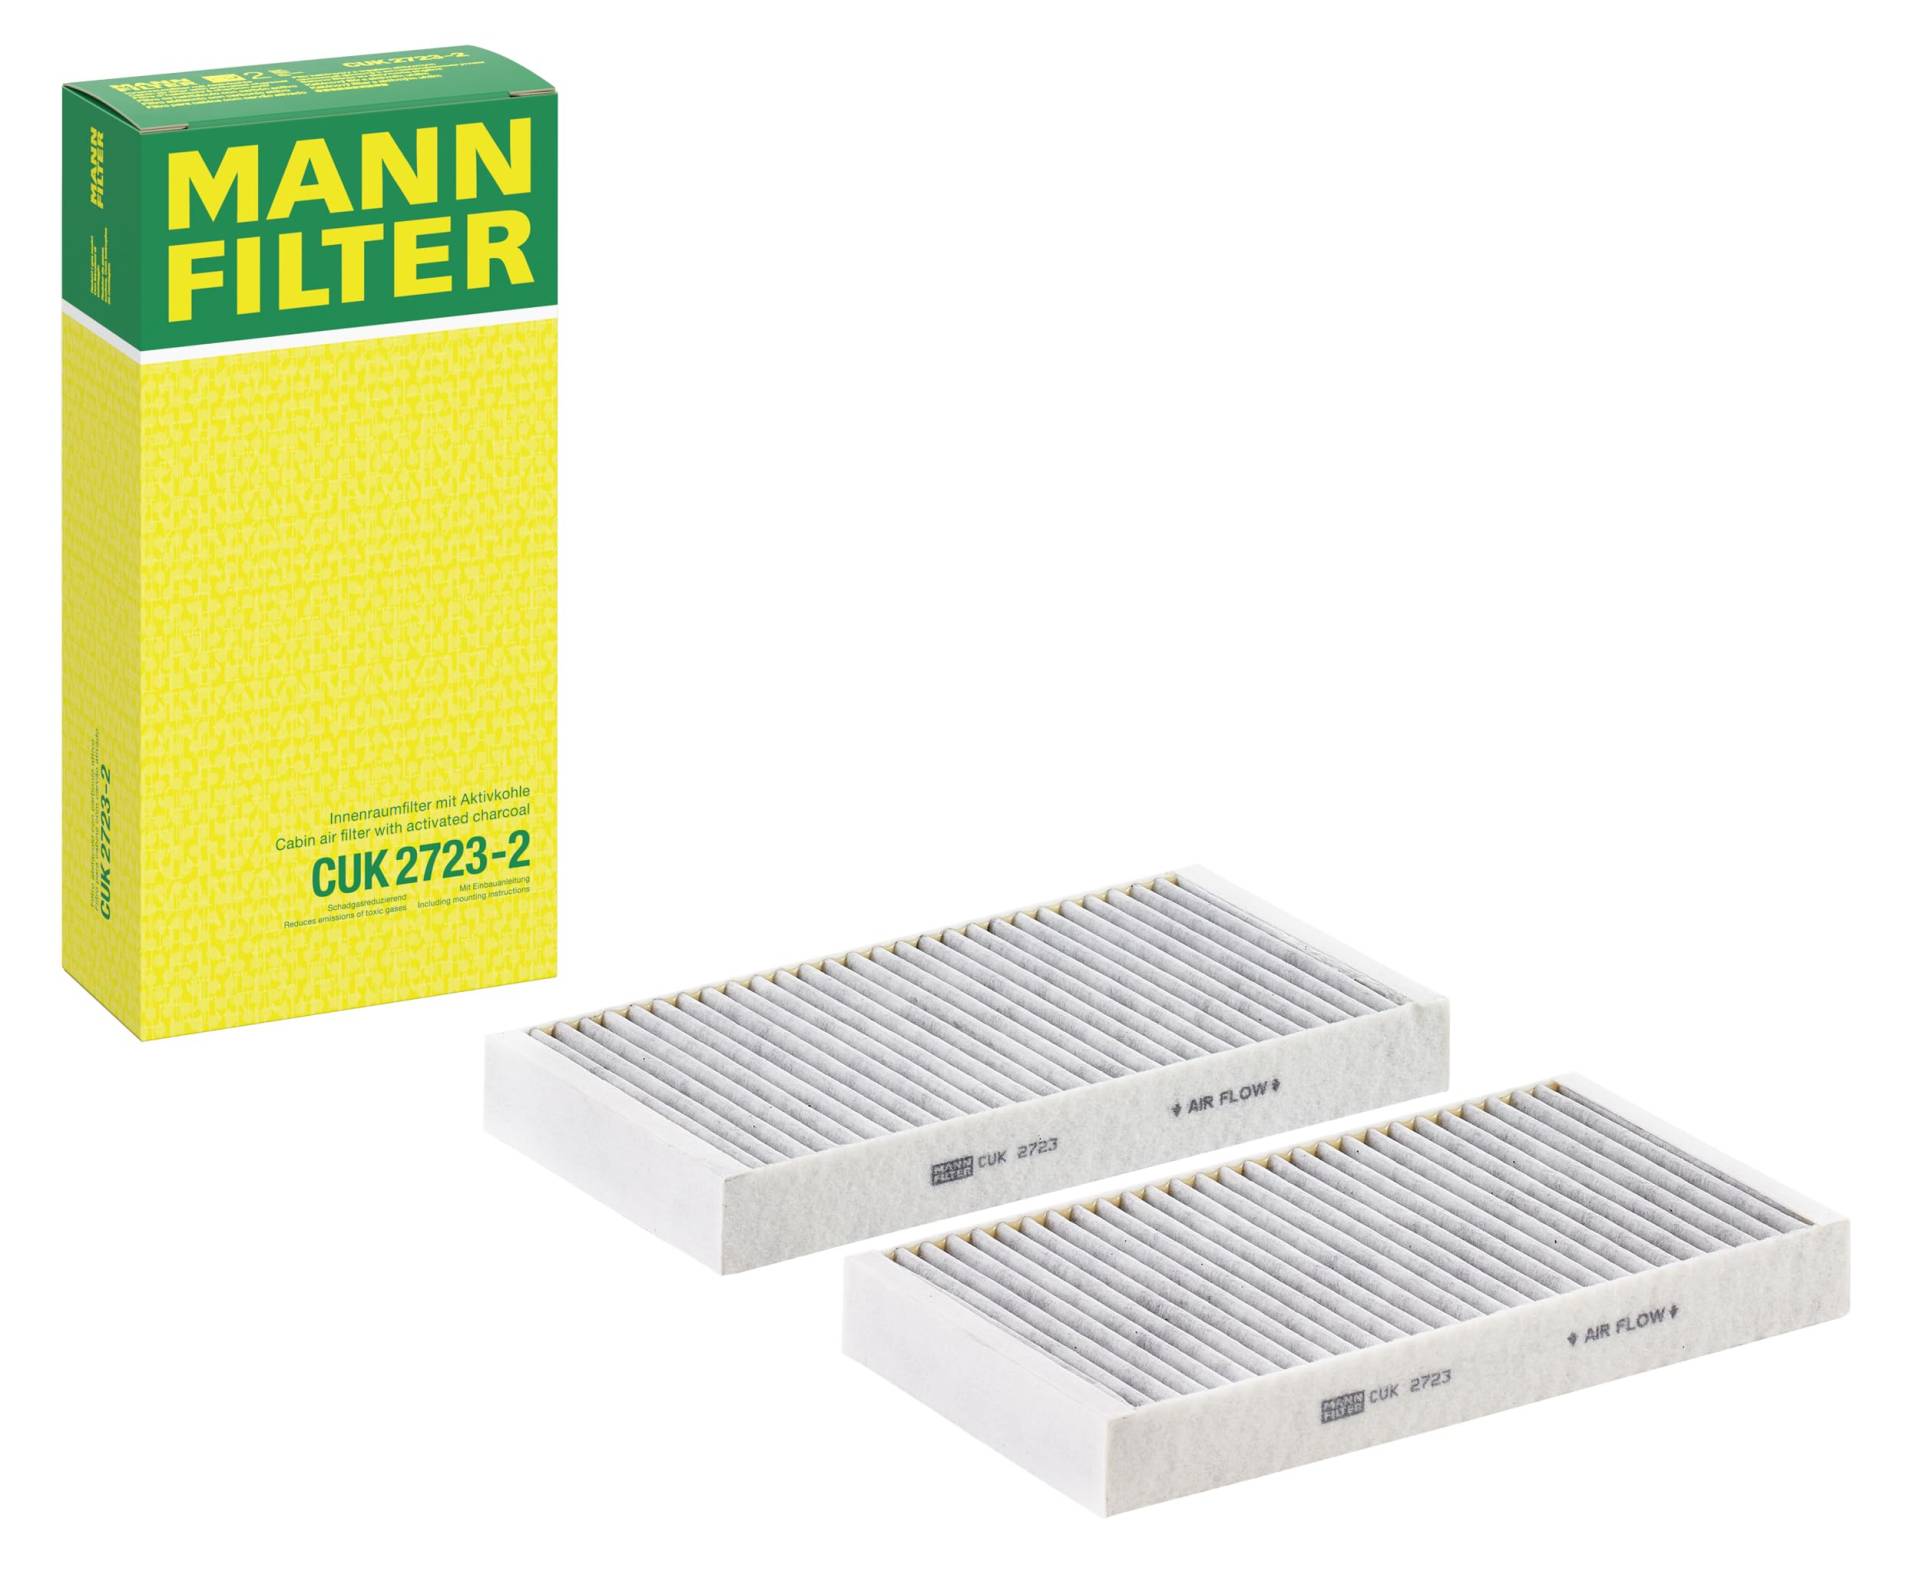 MANN-FILTER CUK 2723-2 Innenraumfilter – Kabinenluftfilter Satz (2er Set) – Für PKW von MANN-FILTER